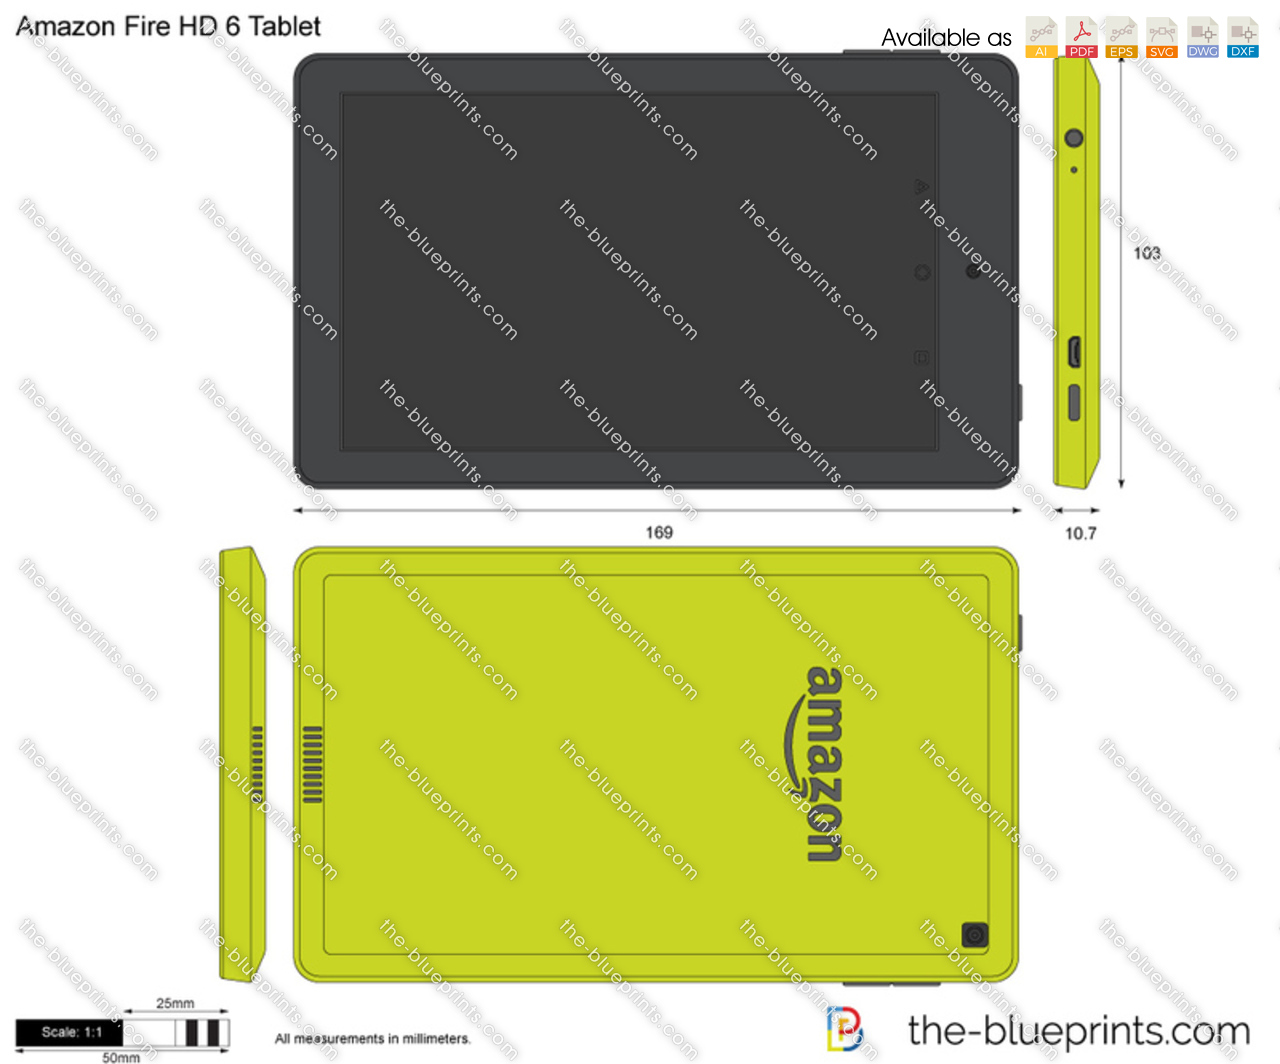 Amazon Fire HD 6 Tablet